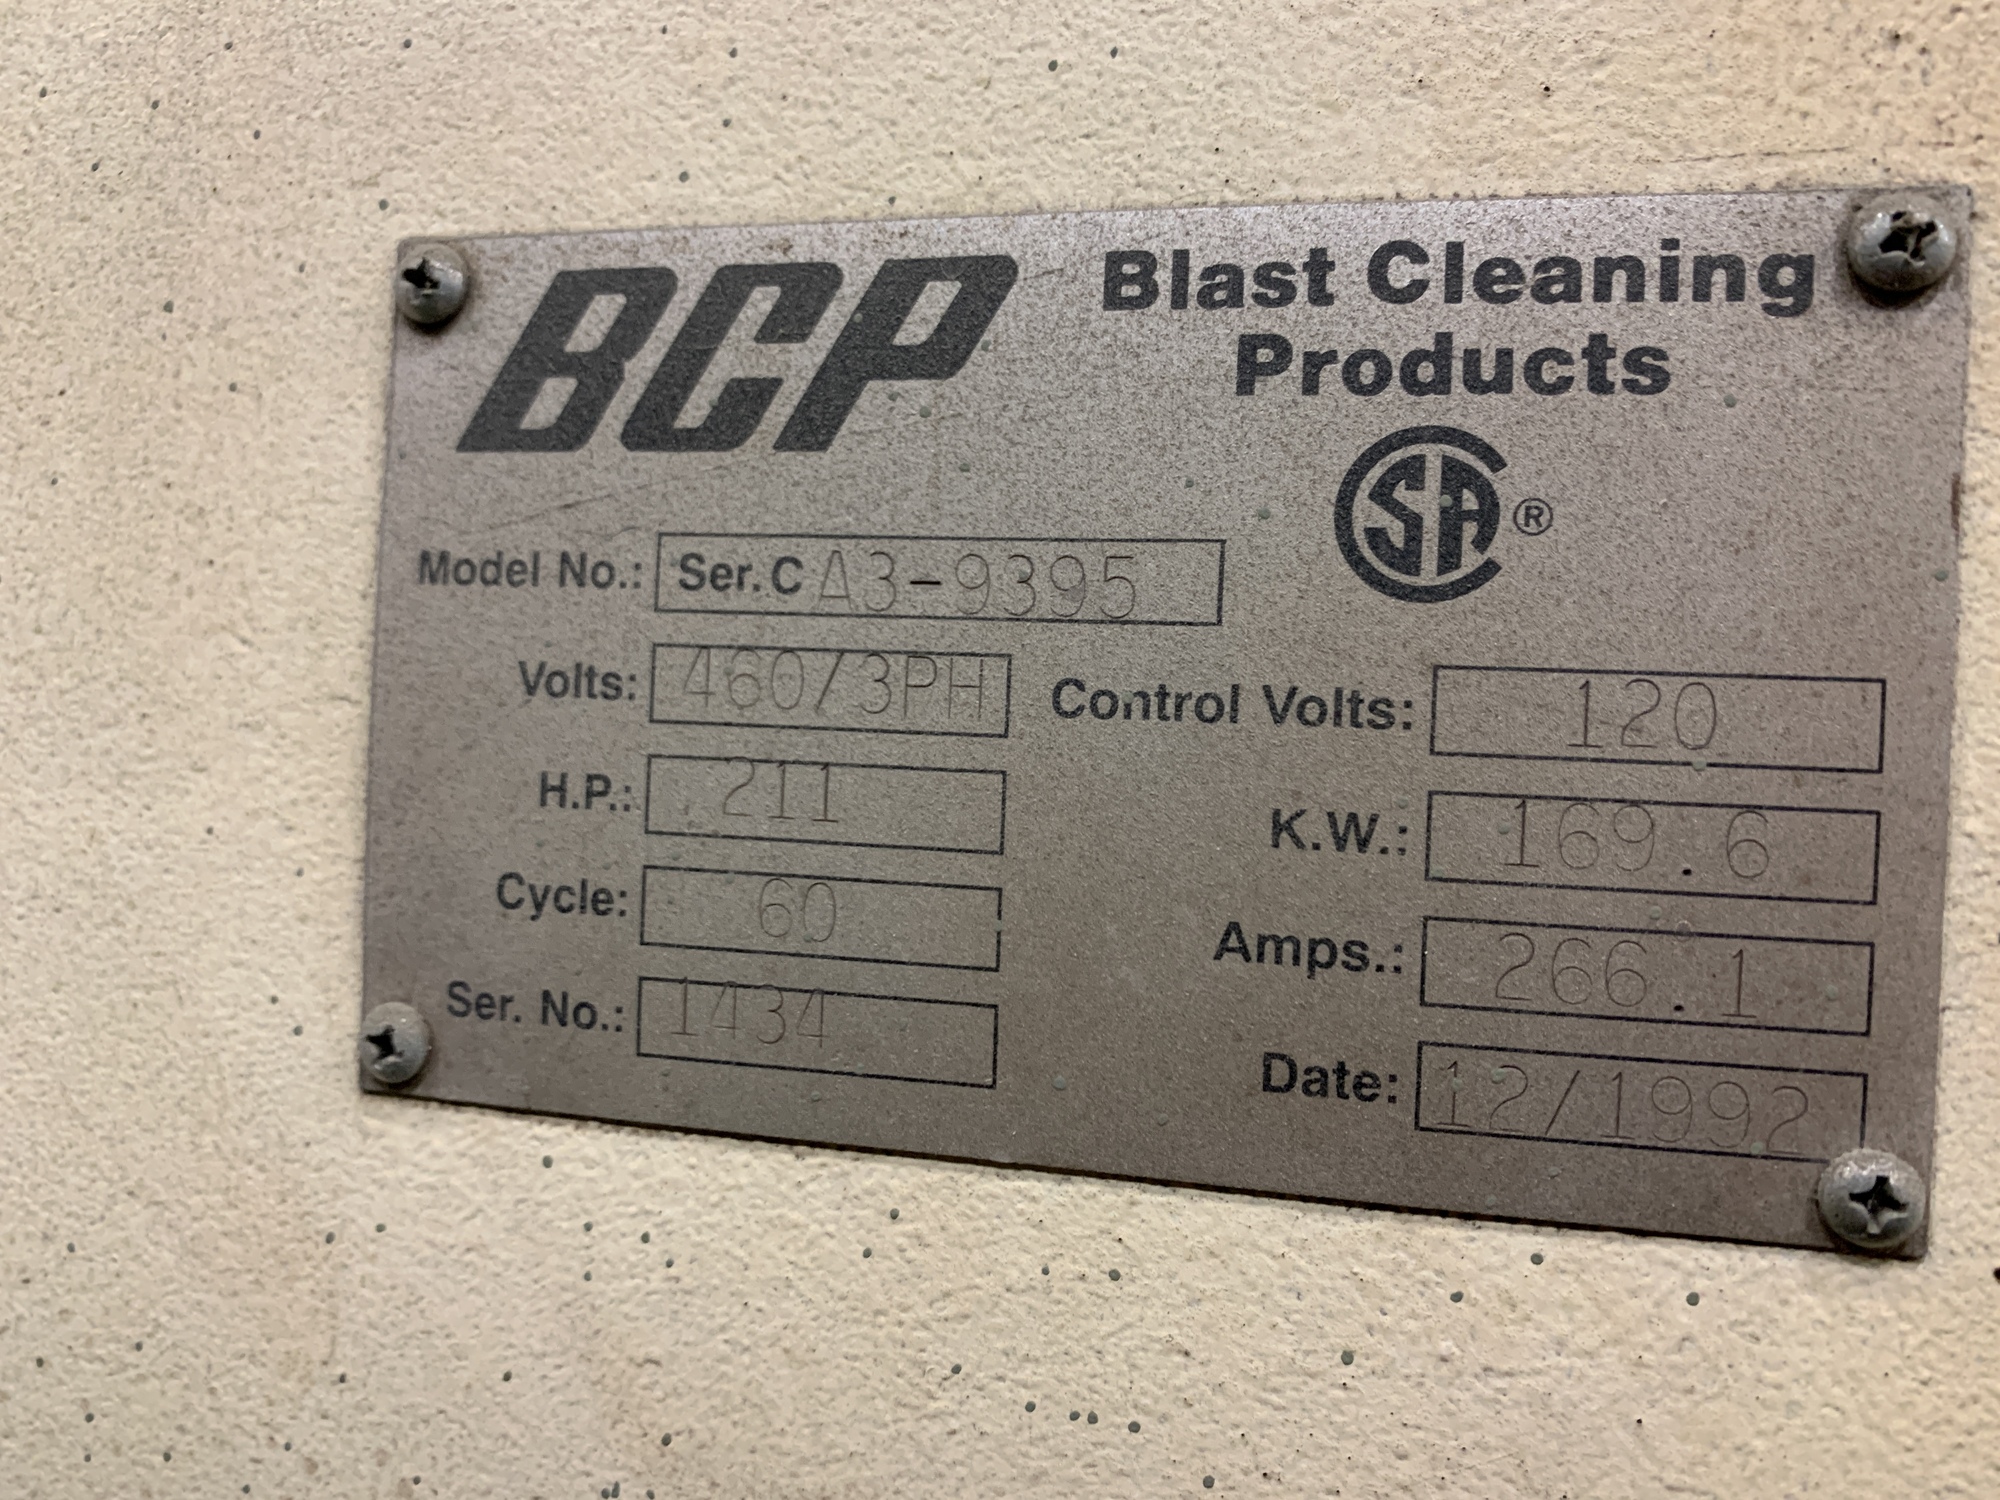 1992 BCP Flow Thru Shot Blast/Cleaning Equipment | Bradford Equipment Company Inc.